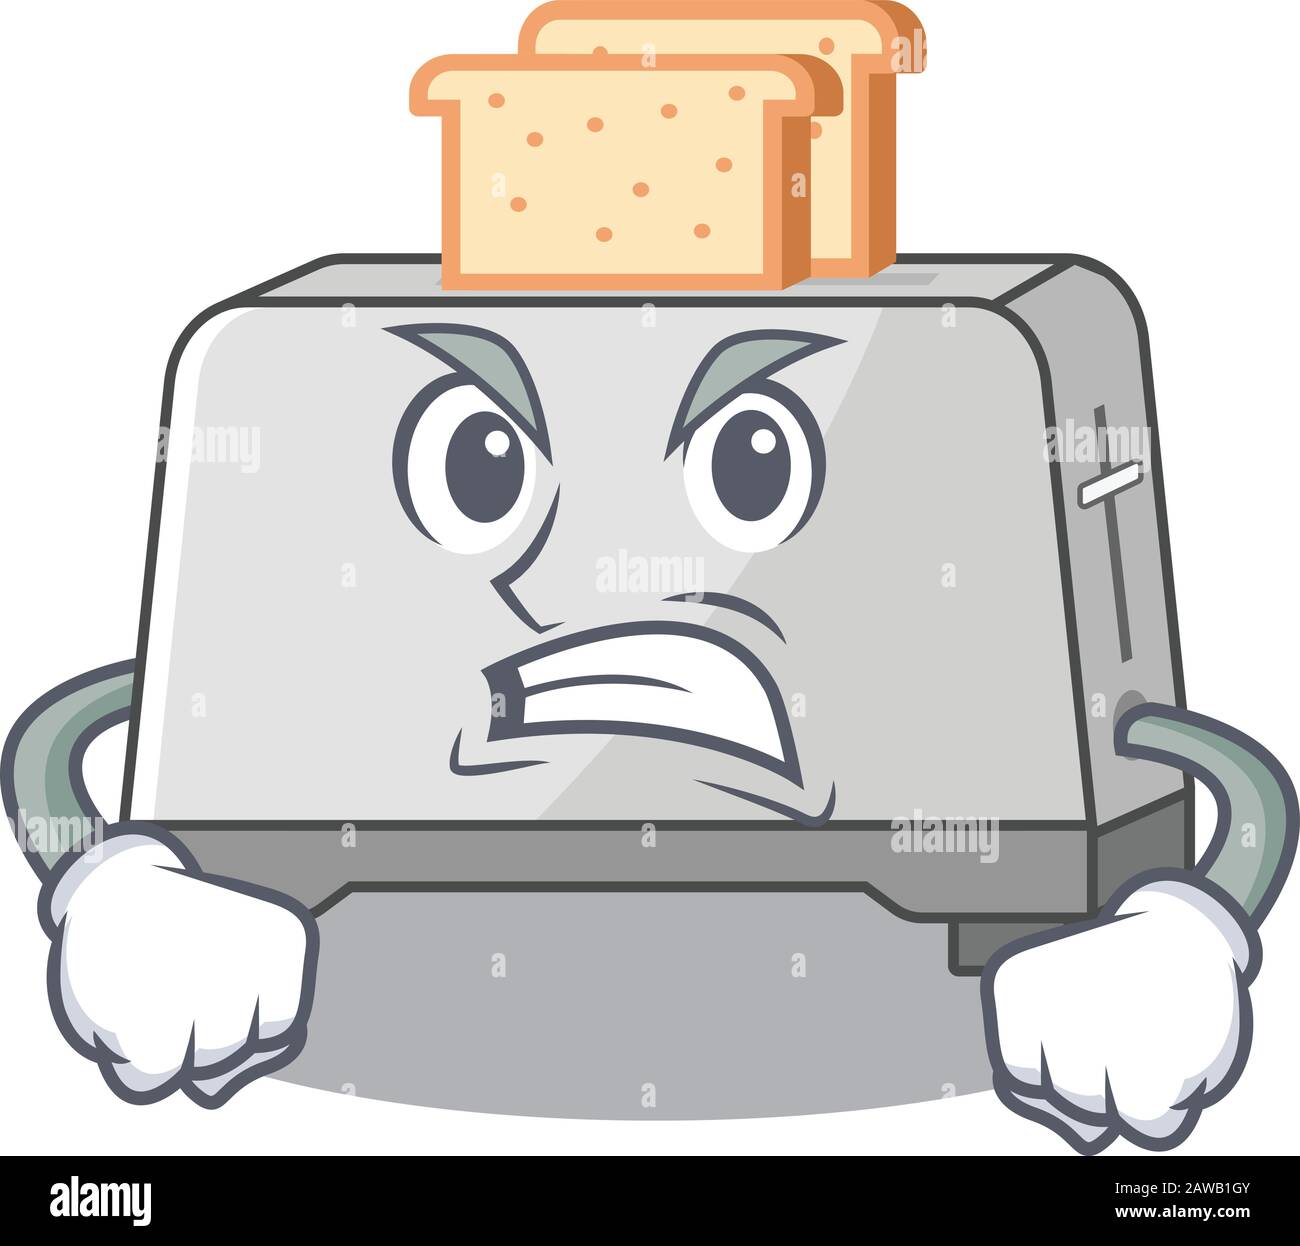 Toaster-Brot-Cartoon-Charakter-Stil mit wütenden Gesicht Stock-Vektorgrafik  - Alamy